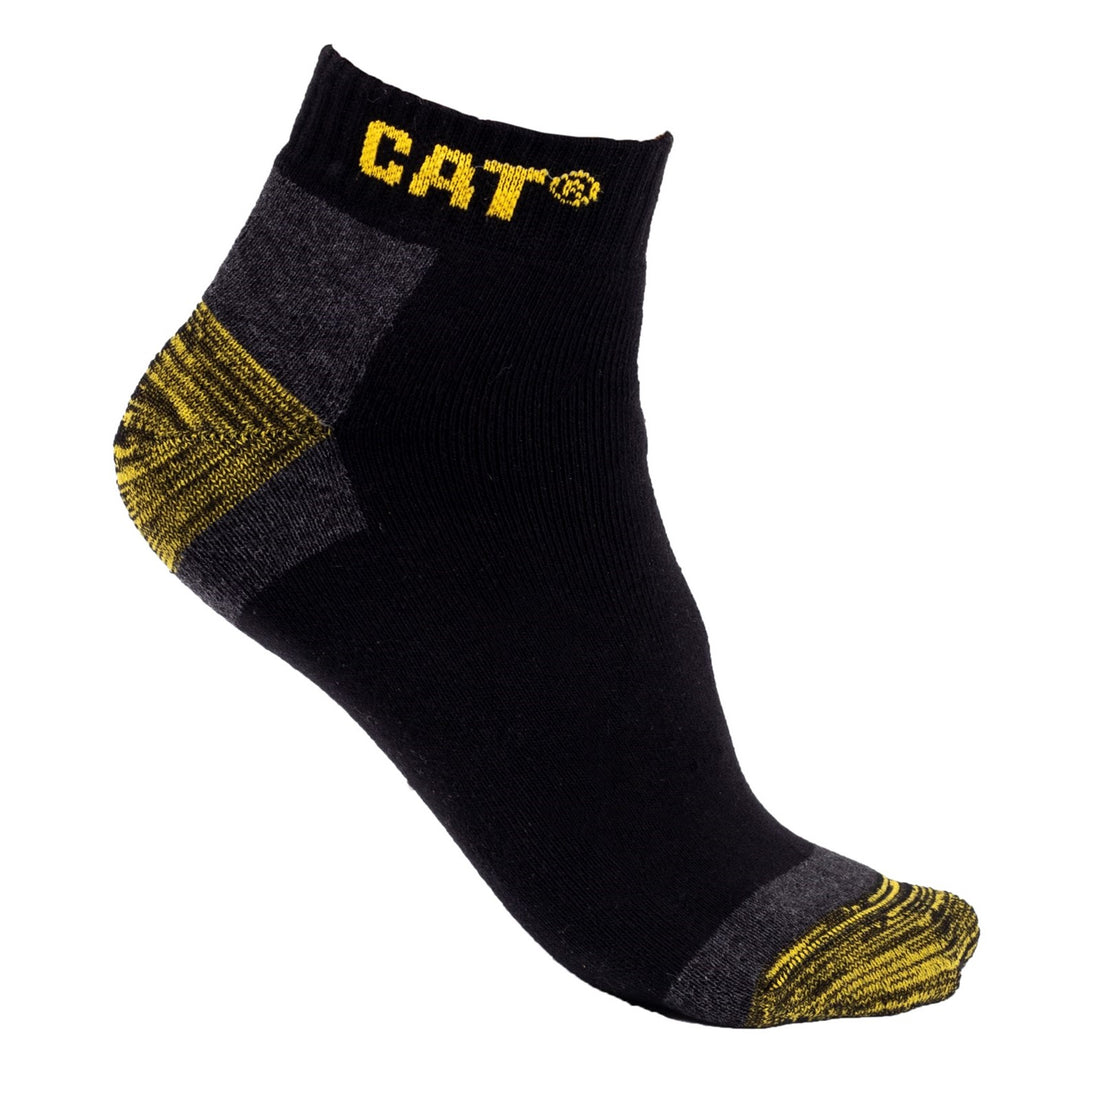 Caterpillar Premium Work Ankle Socks 3 Pair Pack in Black